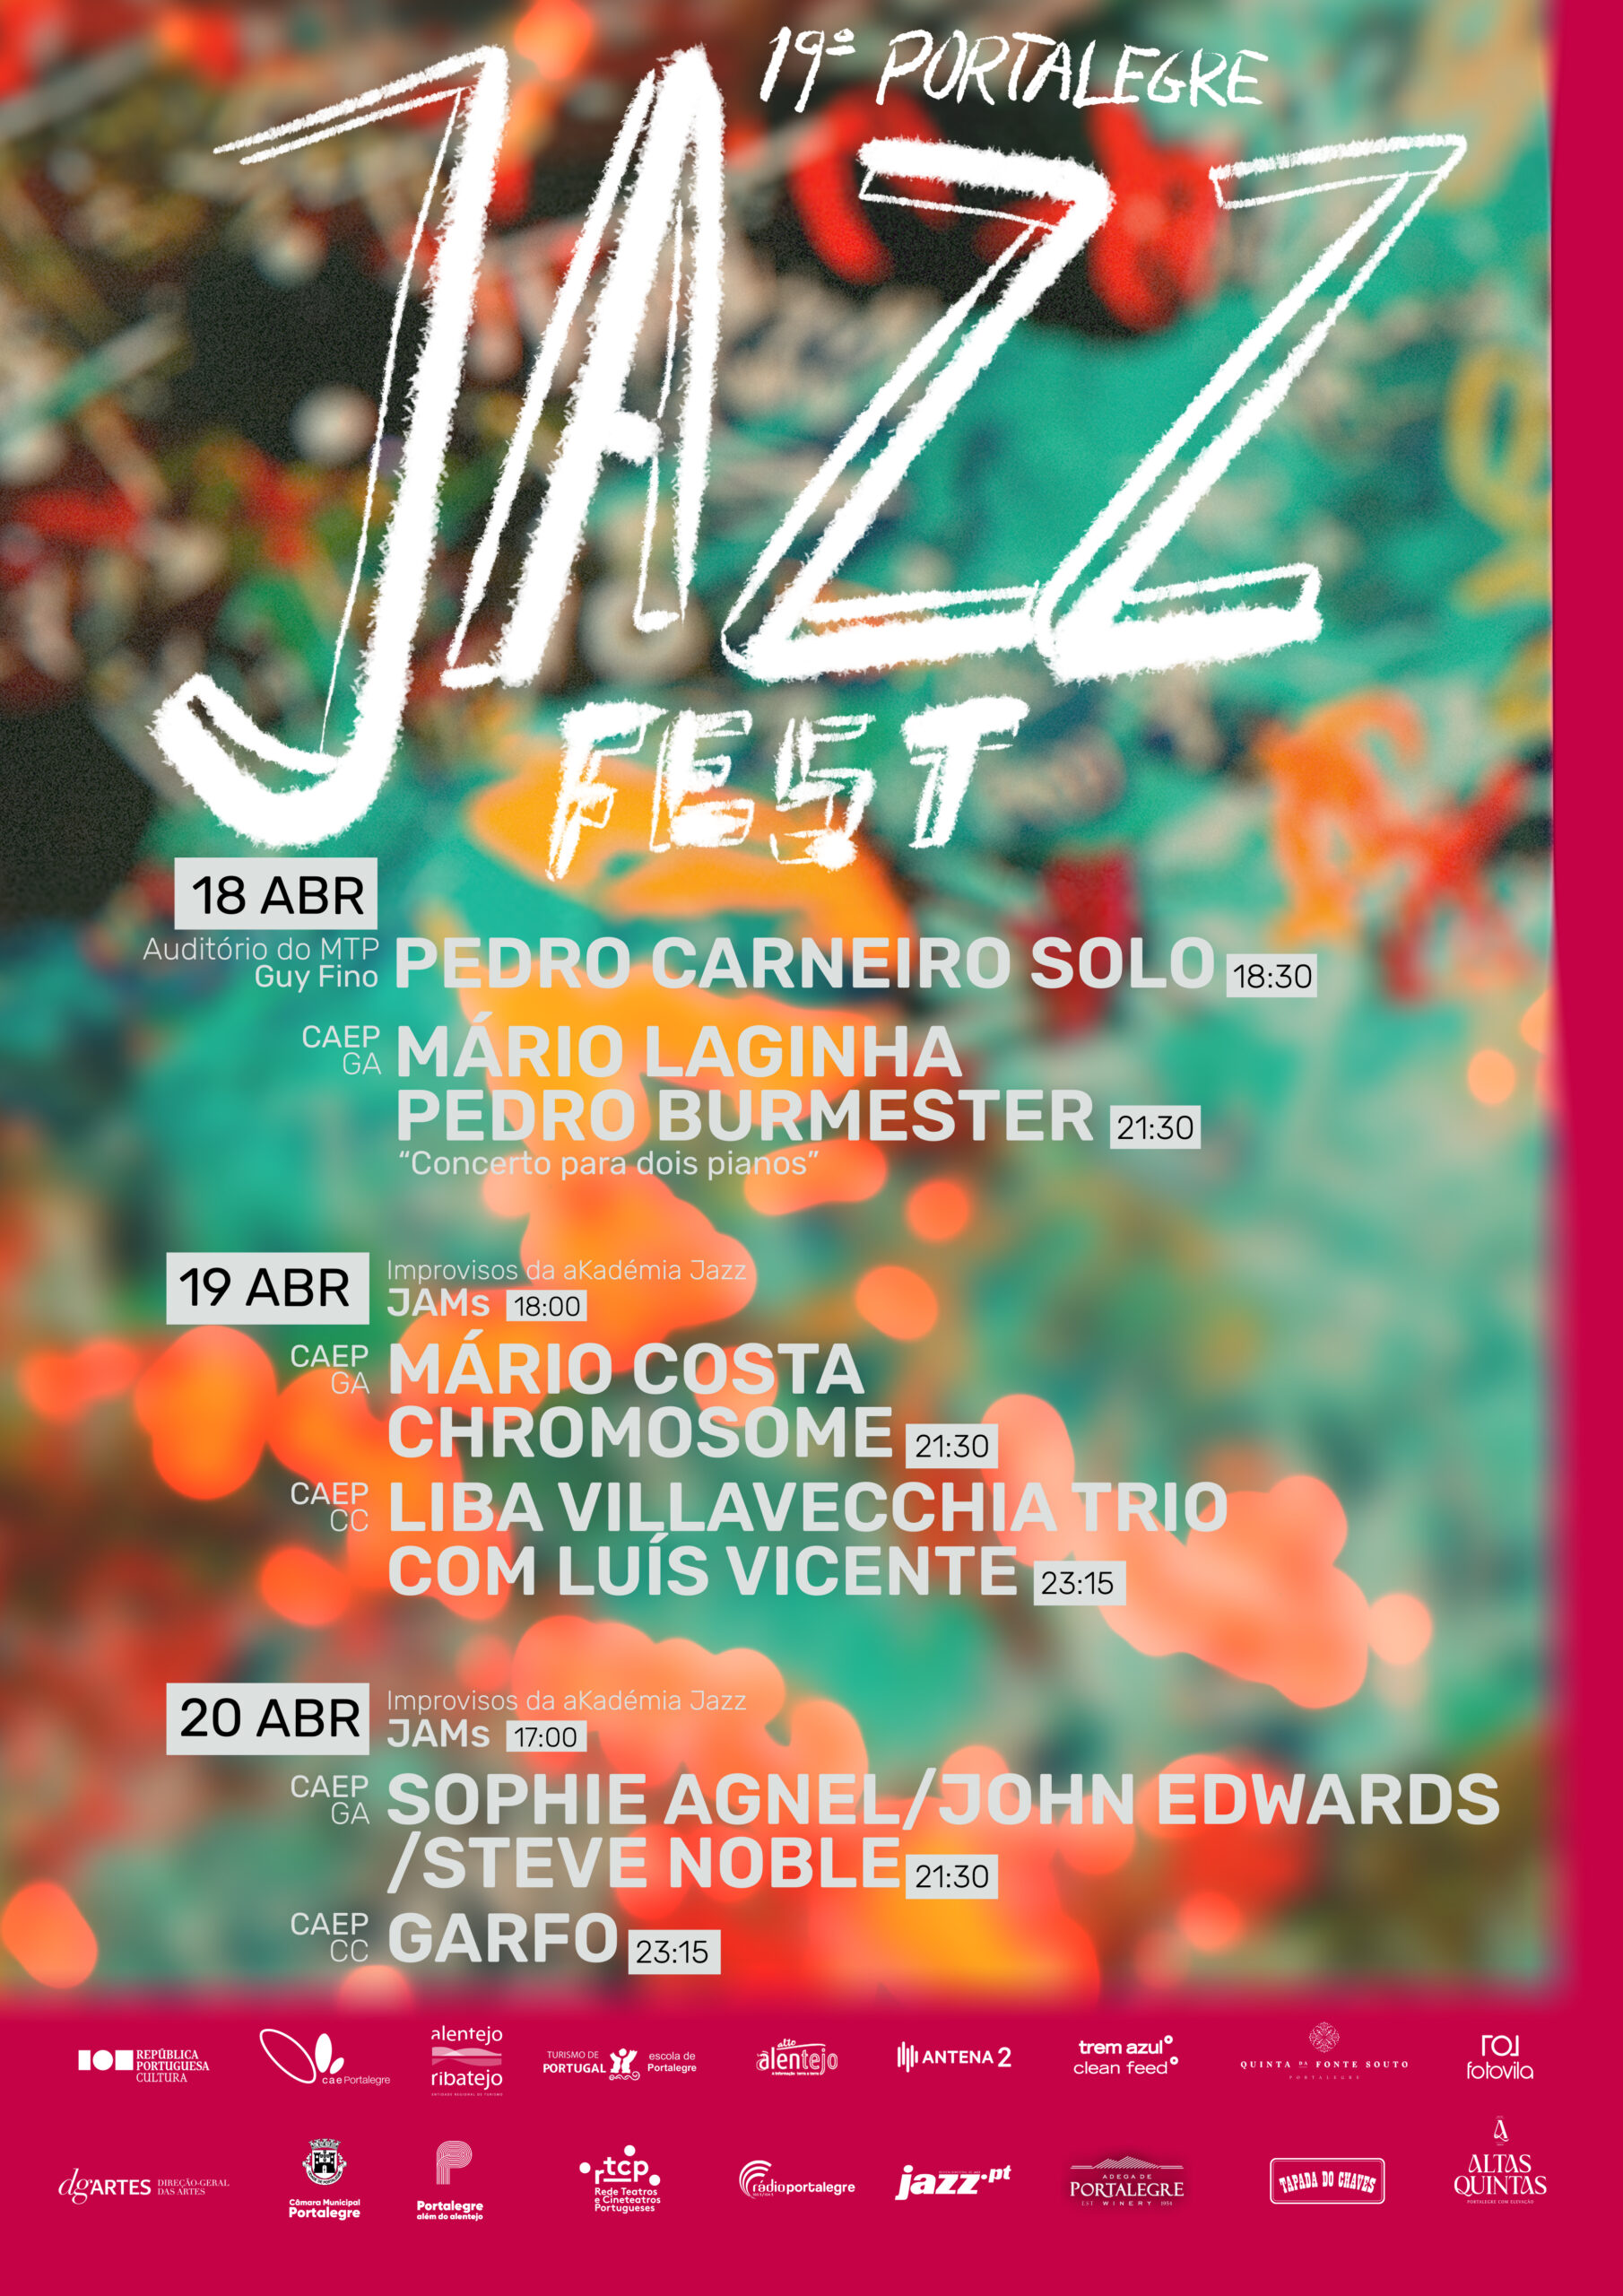 19º Portalegre JazzFest – Festival Internacional de Jazz de Portalegre: 18, 19 e 20 de abril